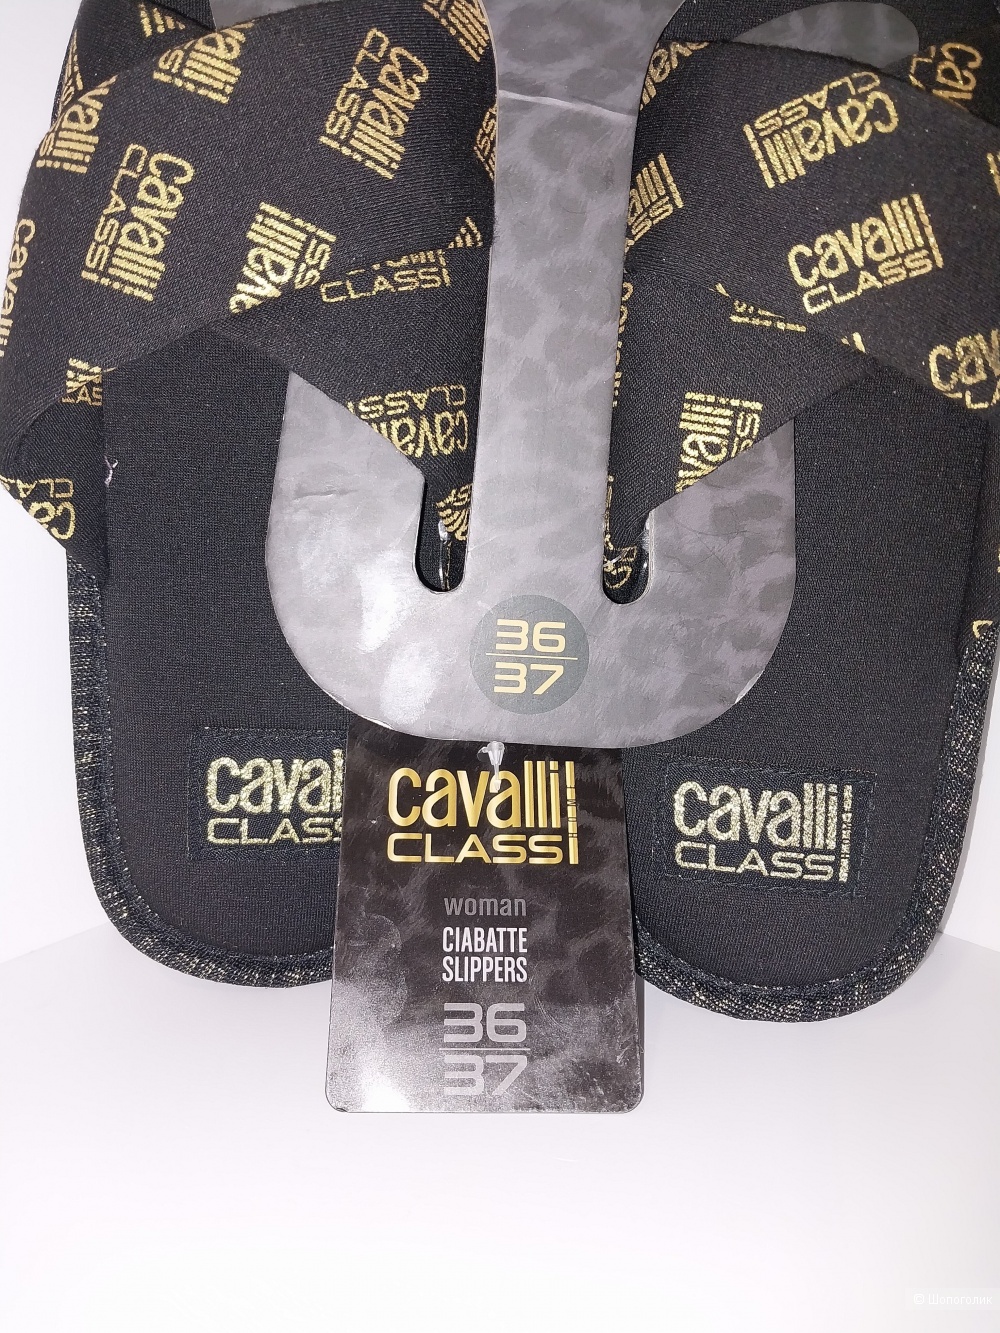 Cavalli Class тапочки домашние размер 36/37